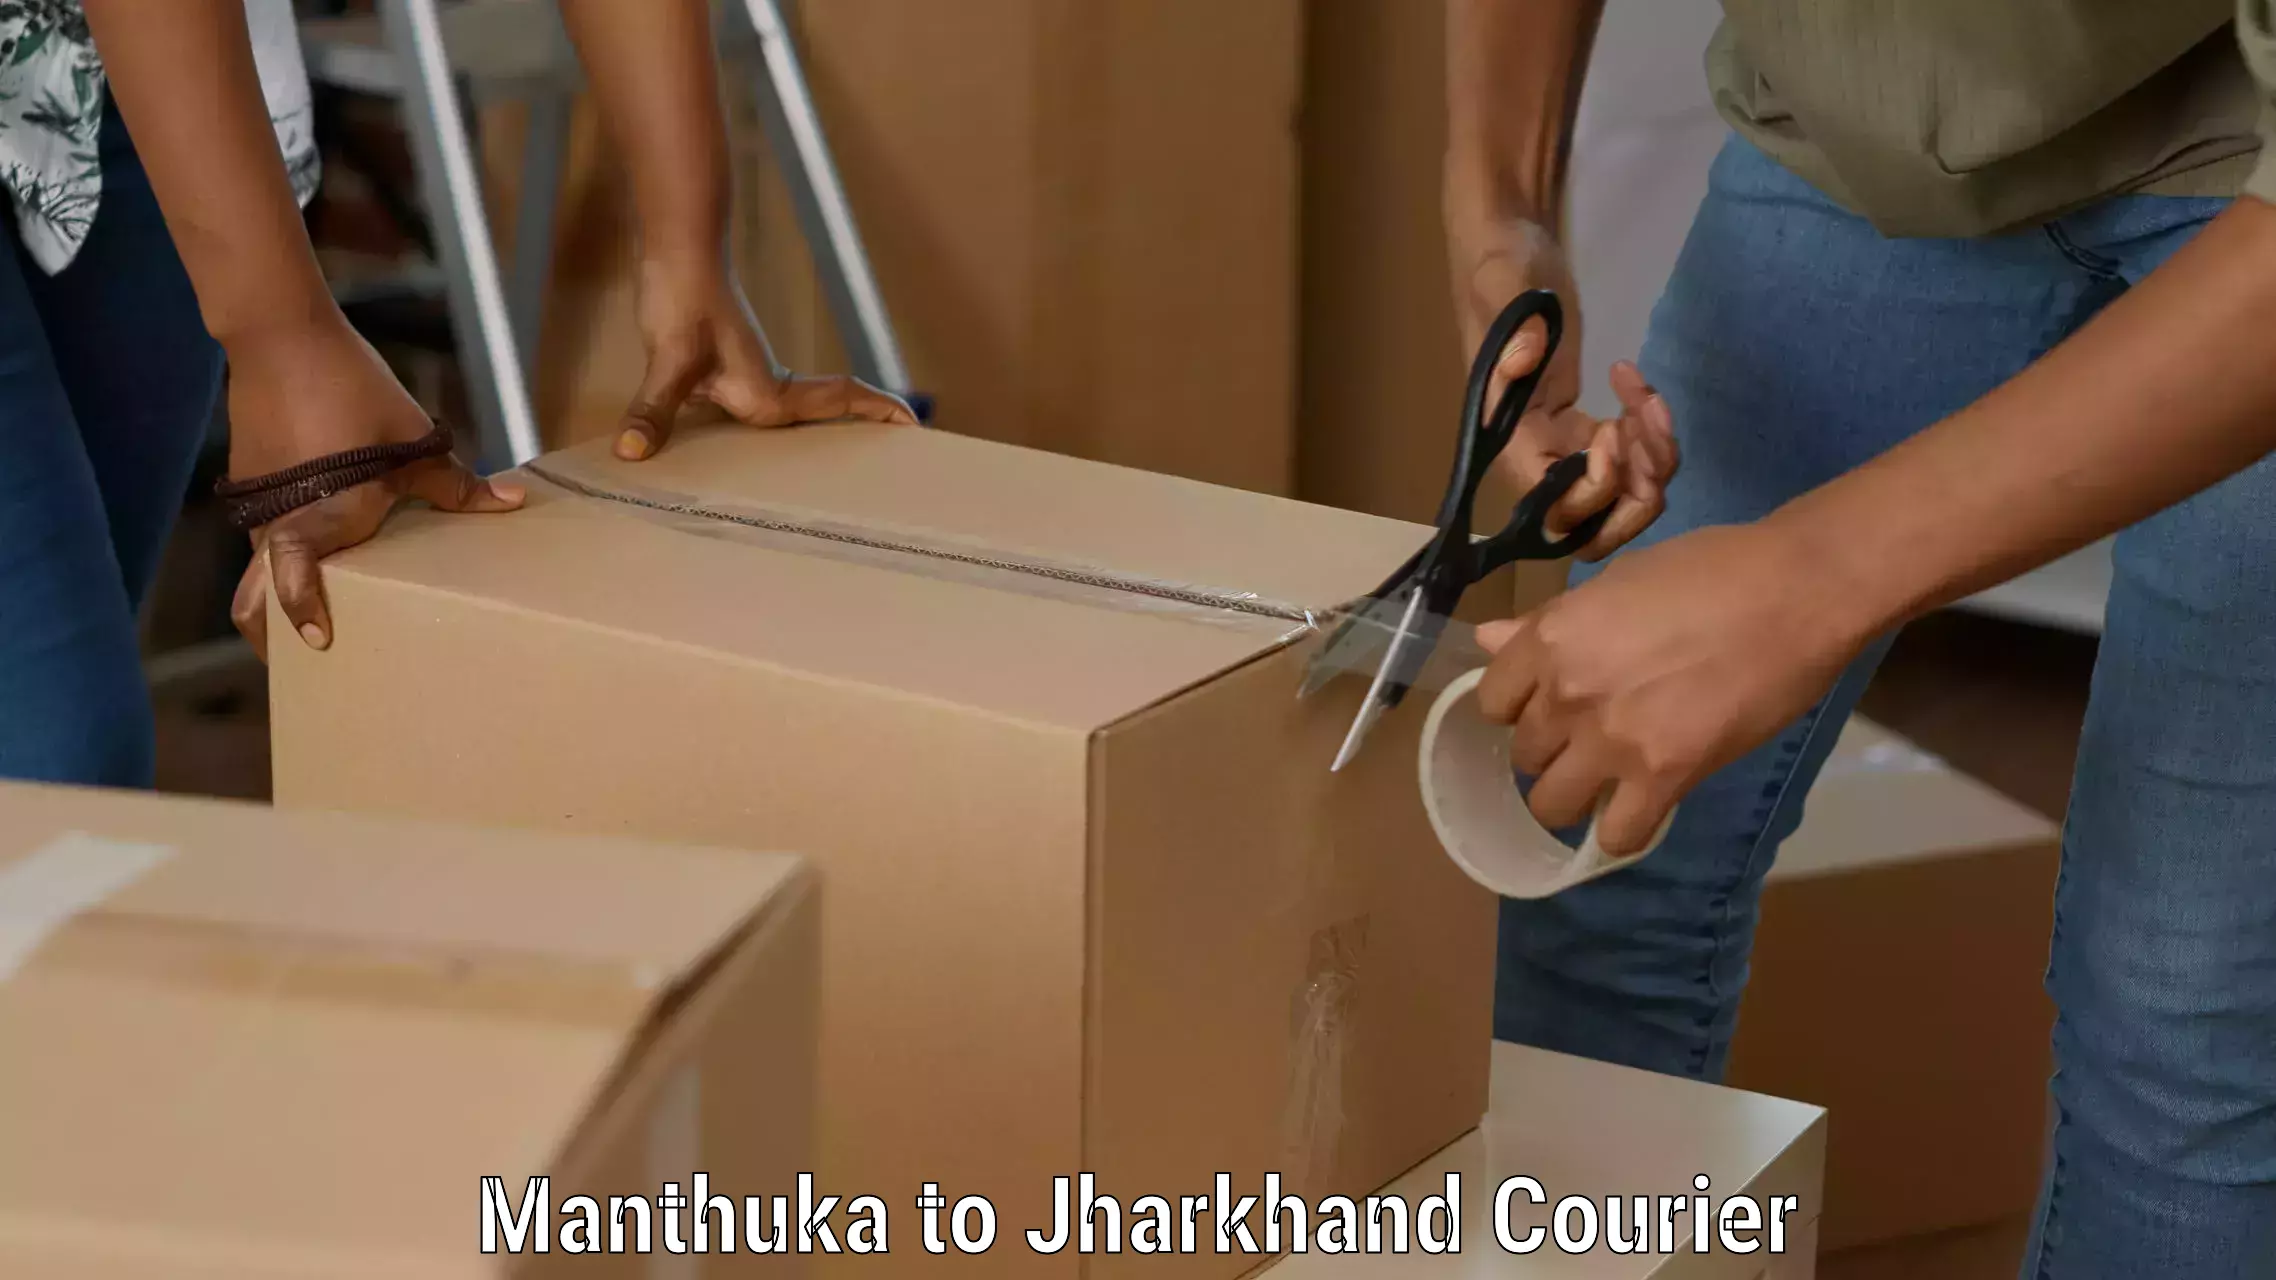 Professional courier handling Manthuka to Noamundi